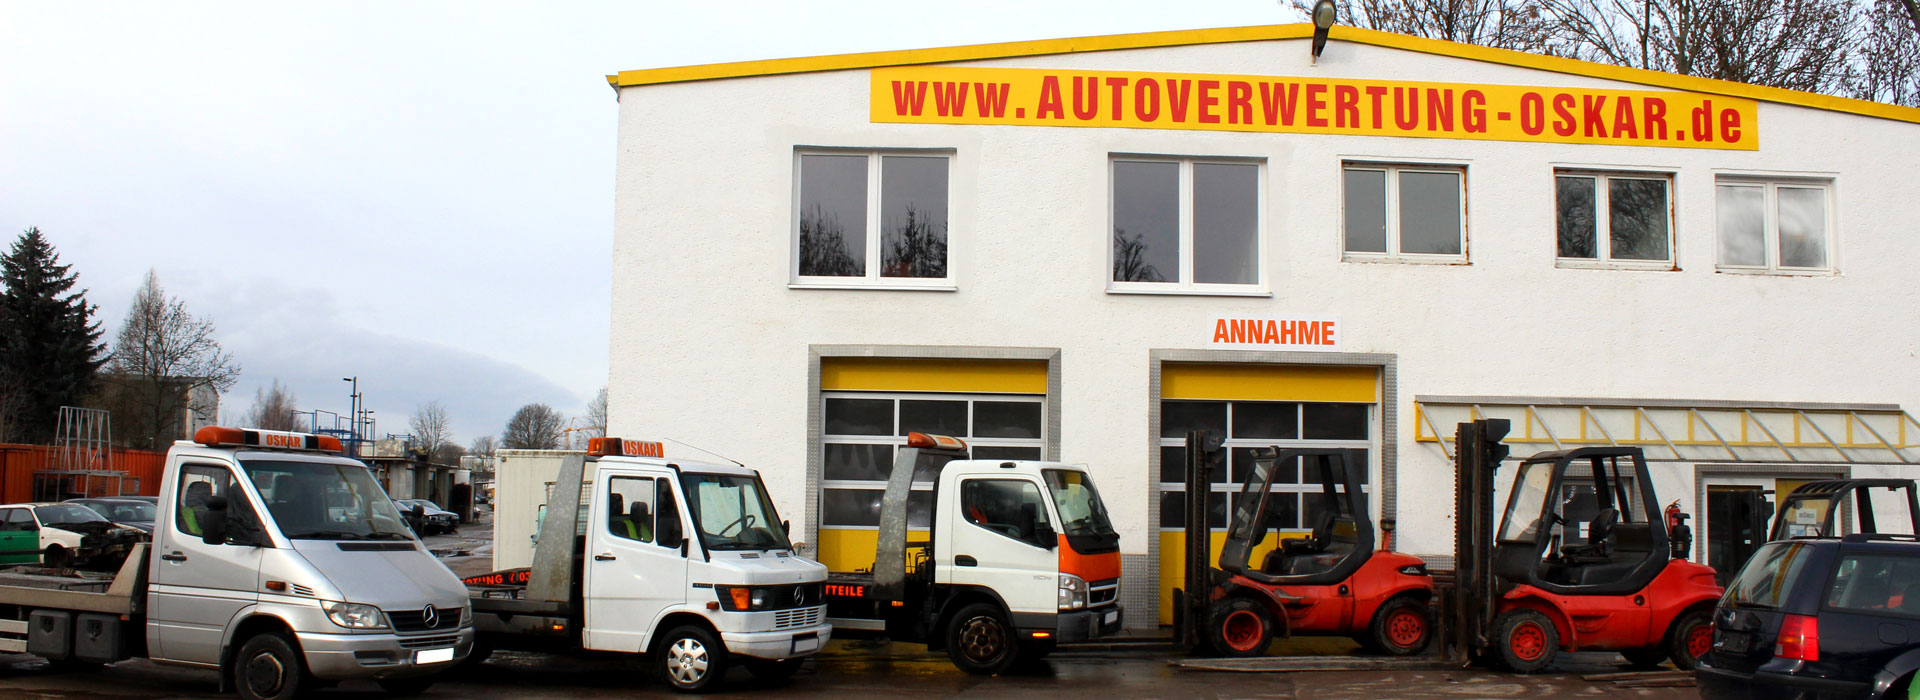 Firmengebäude mit Fahrzeugen - Autoverwertung Oskar